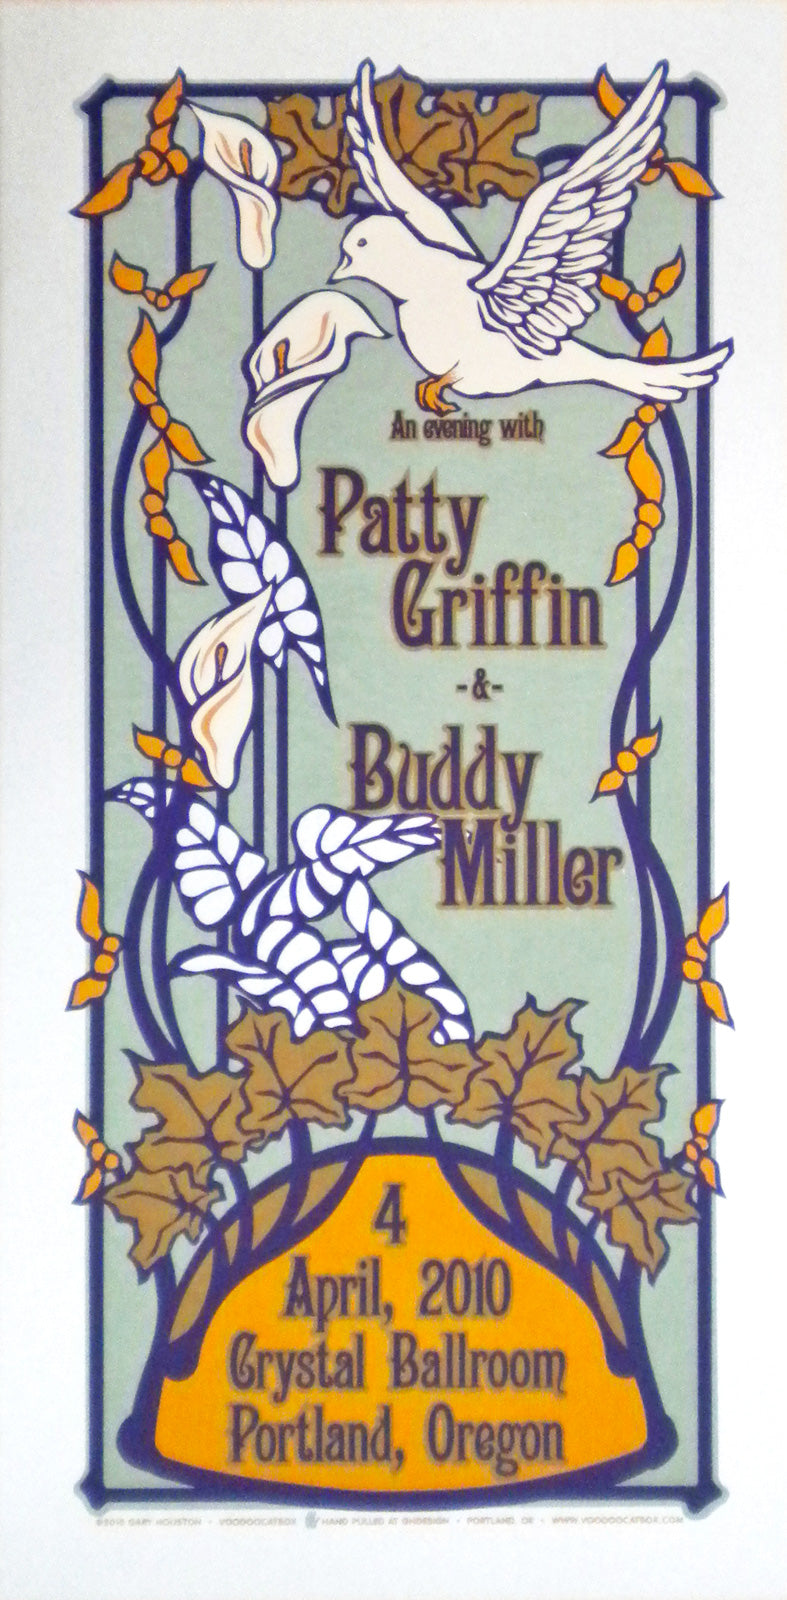 Patty Griffin • Buddy Miller